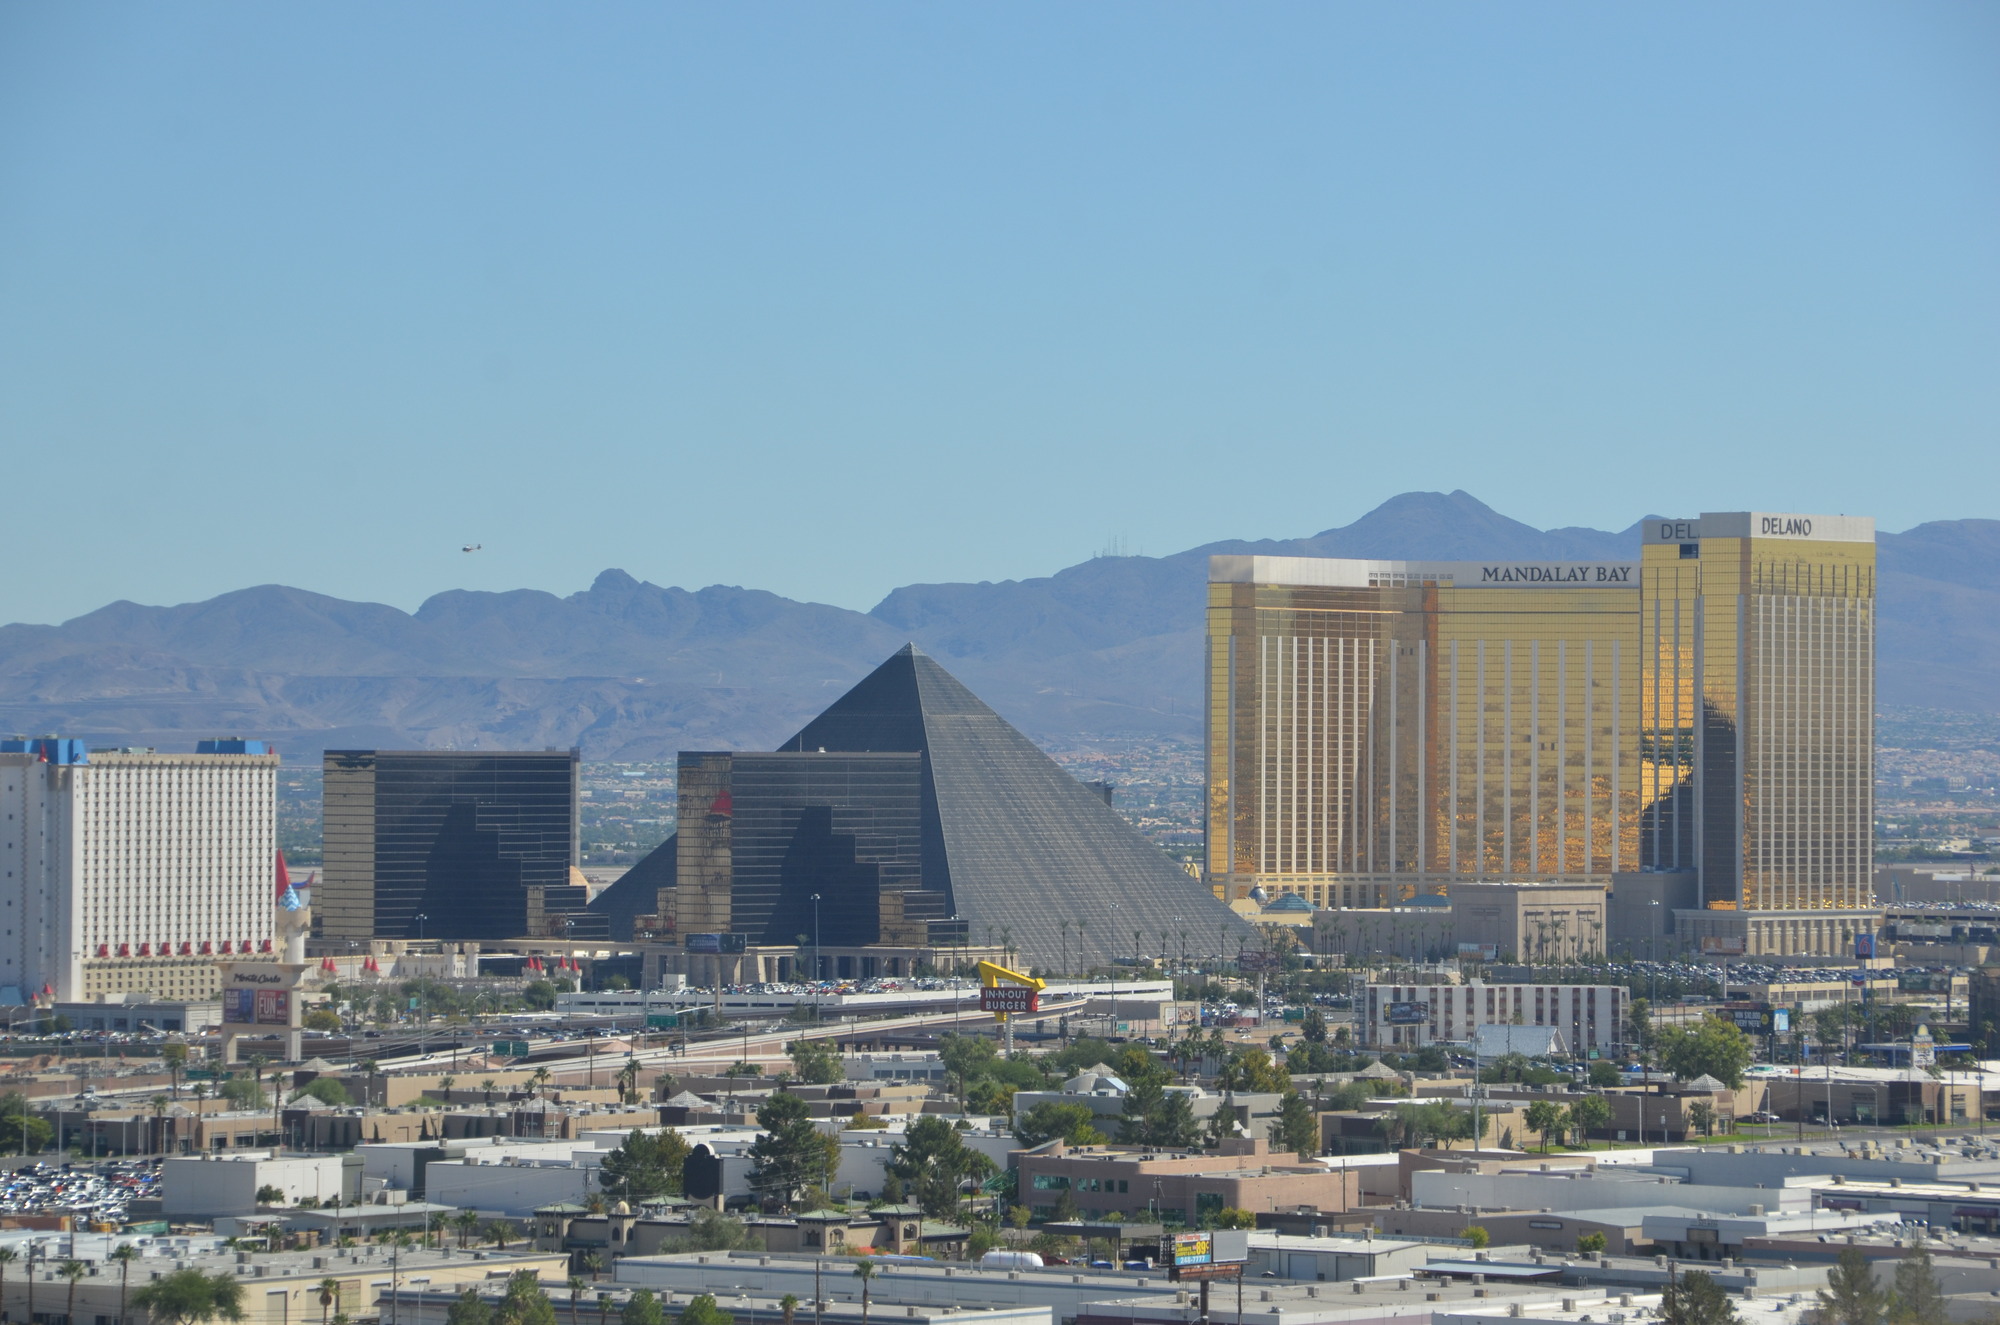 Las Vegas skyline featuring the Luxor and Mandalay Bay